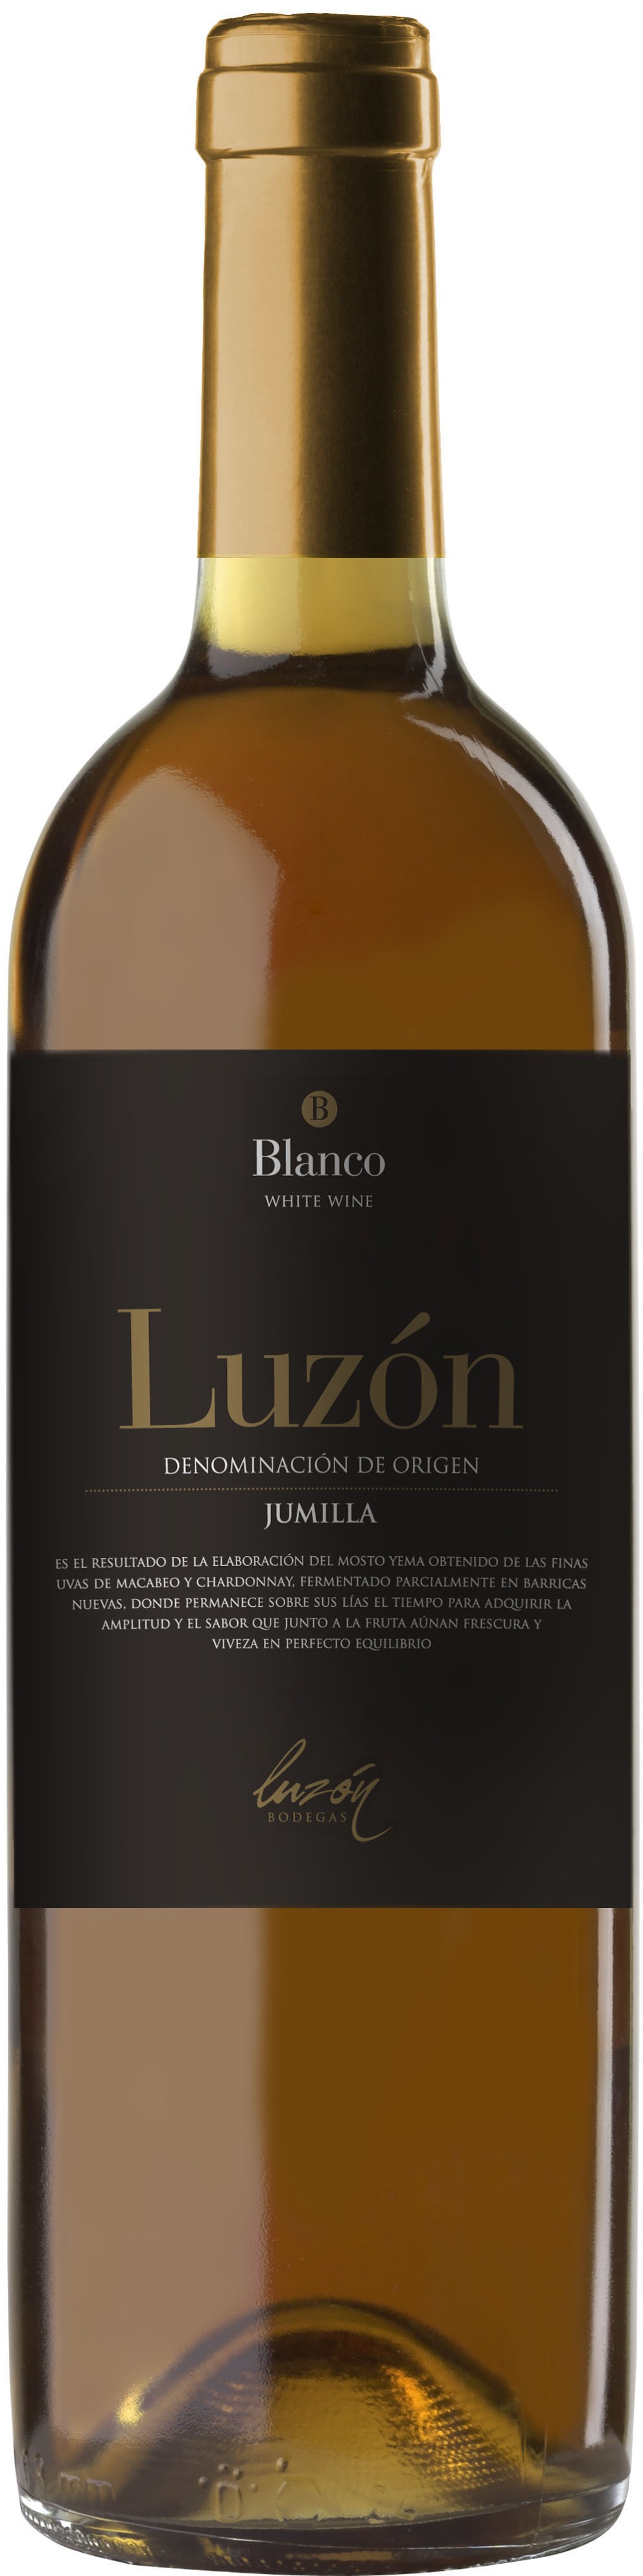 Image of Wine bottle Luzón Blanco